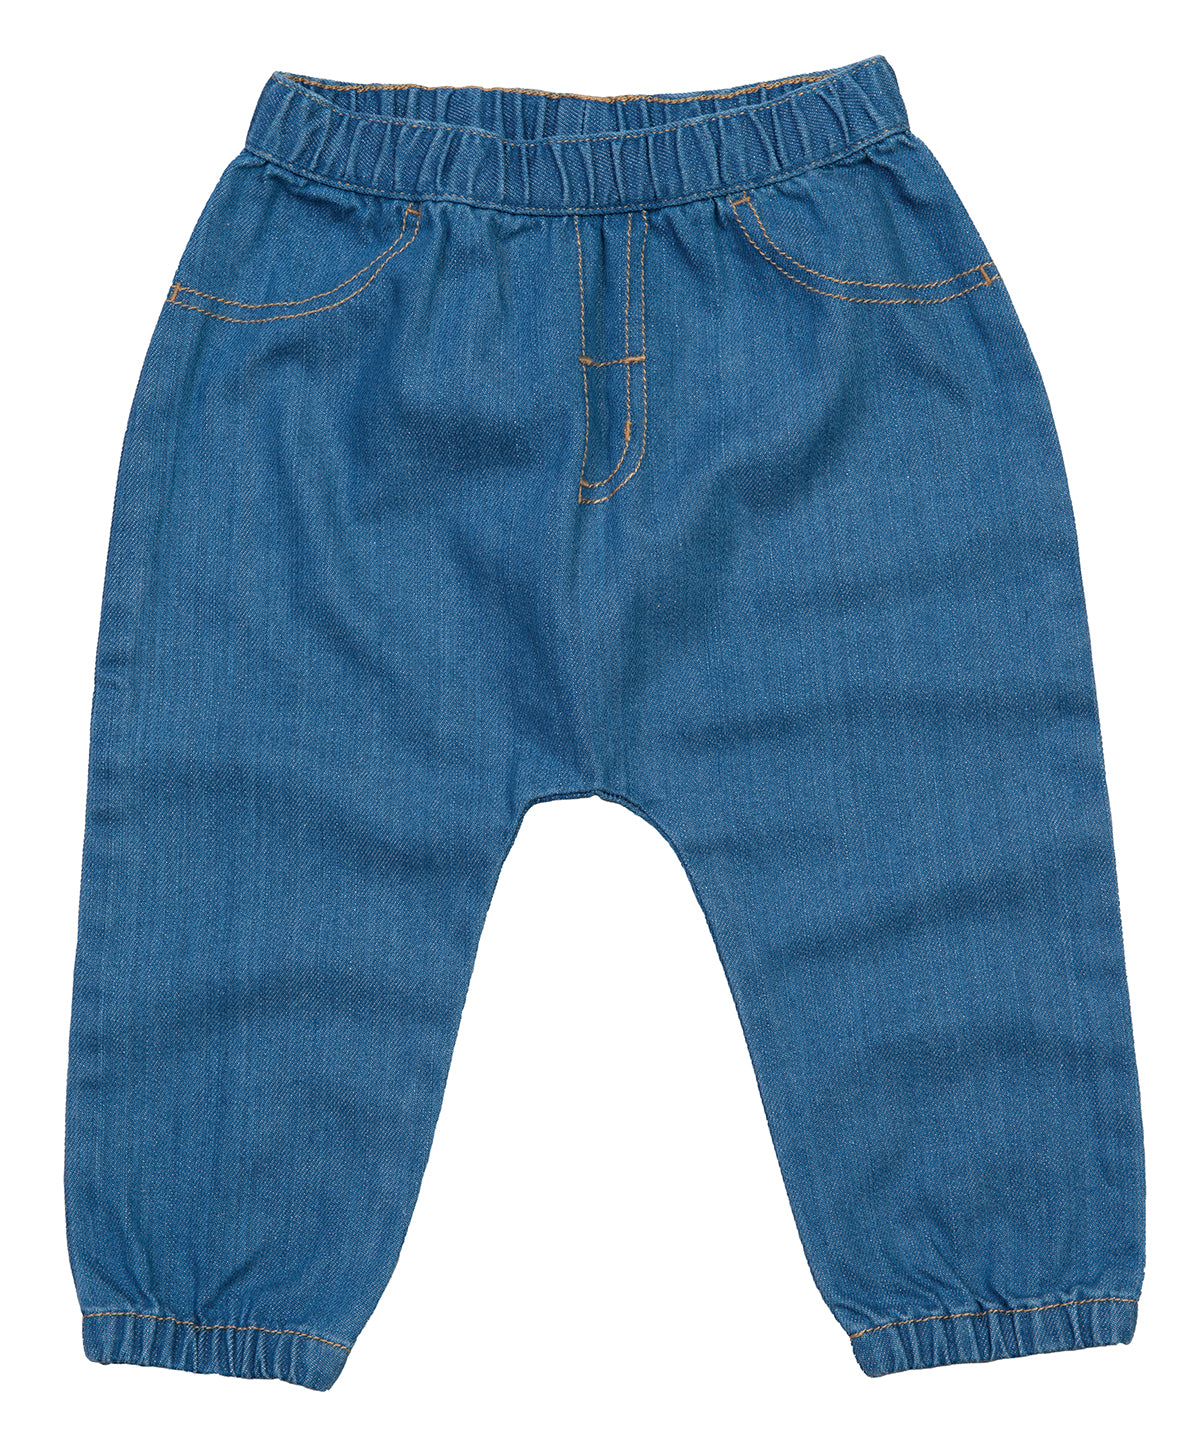 Personalised Trousers - Dark Blue Babybugz Baby Rocks denim trousers